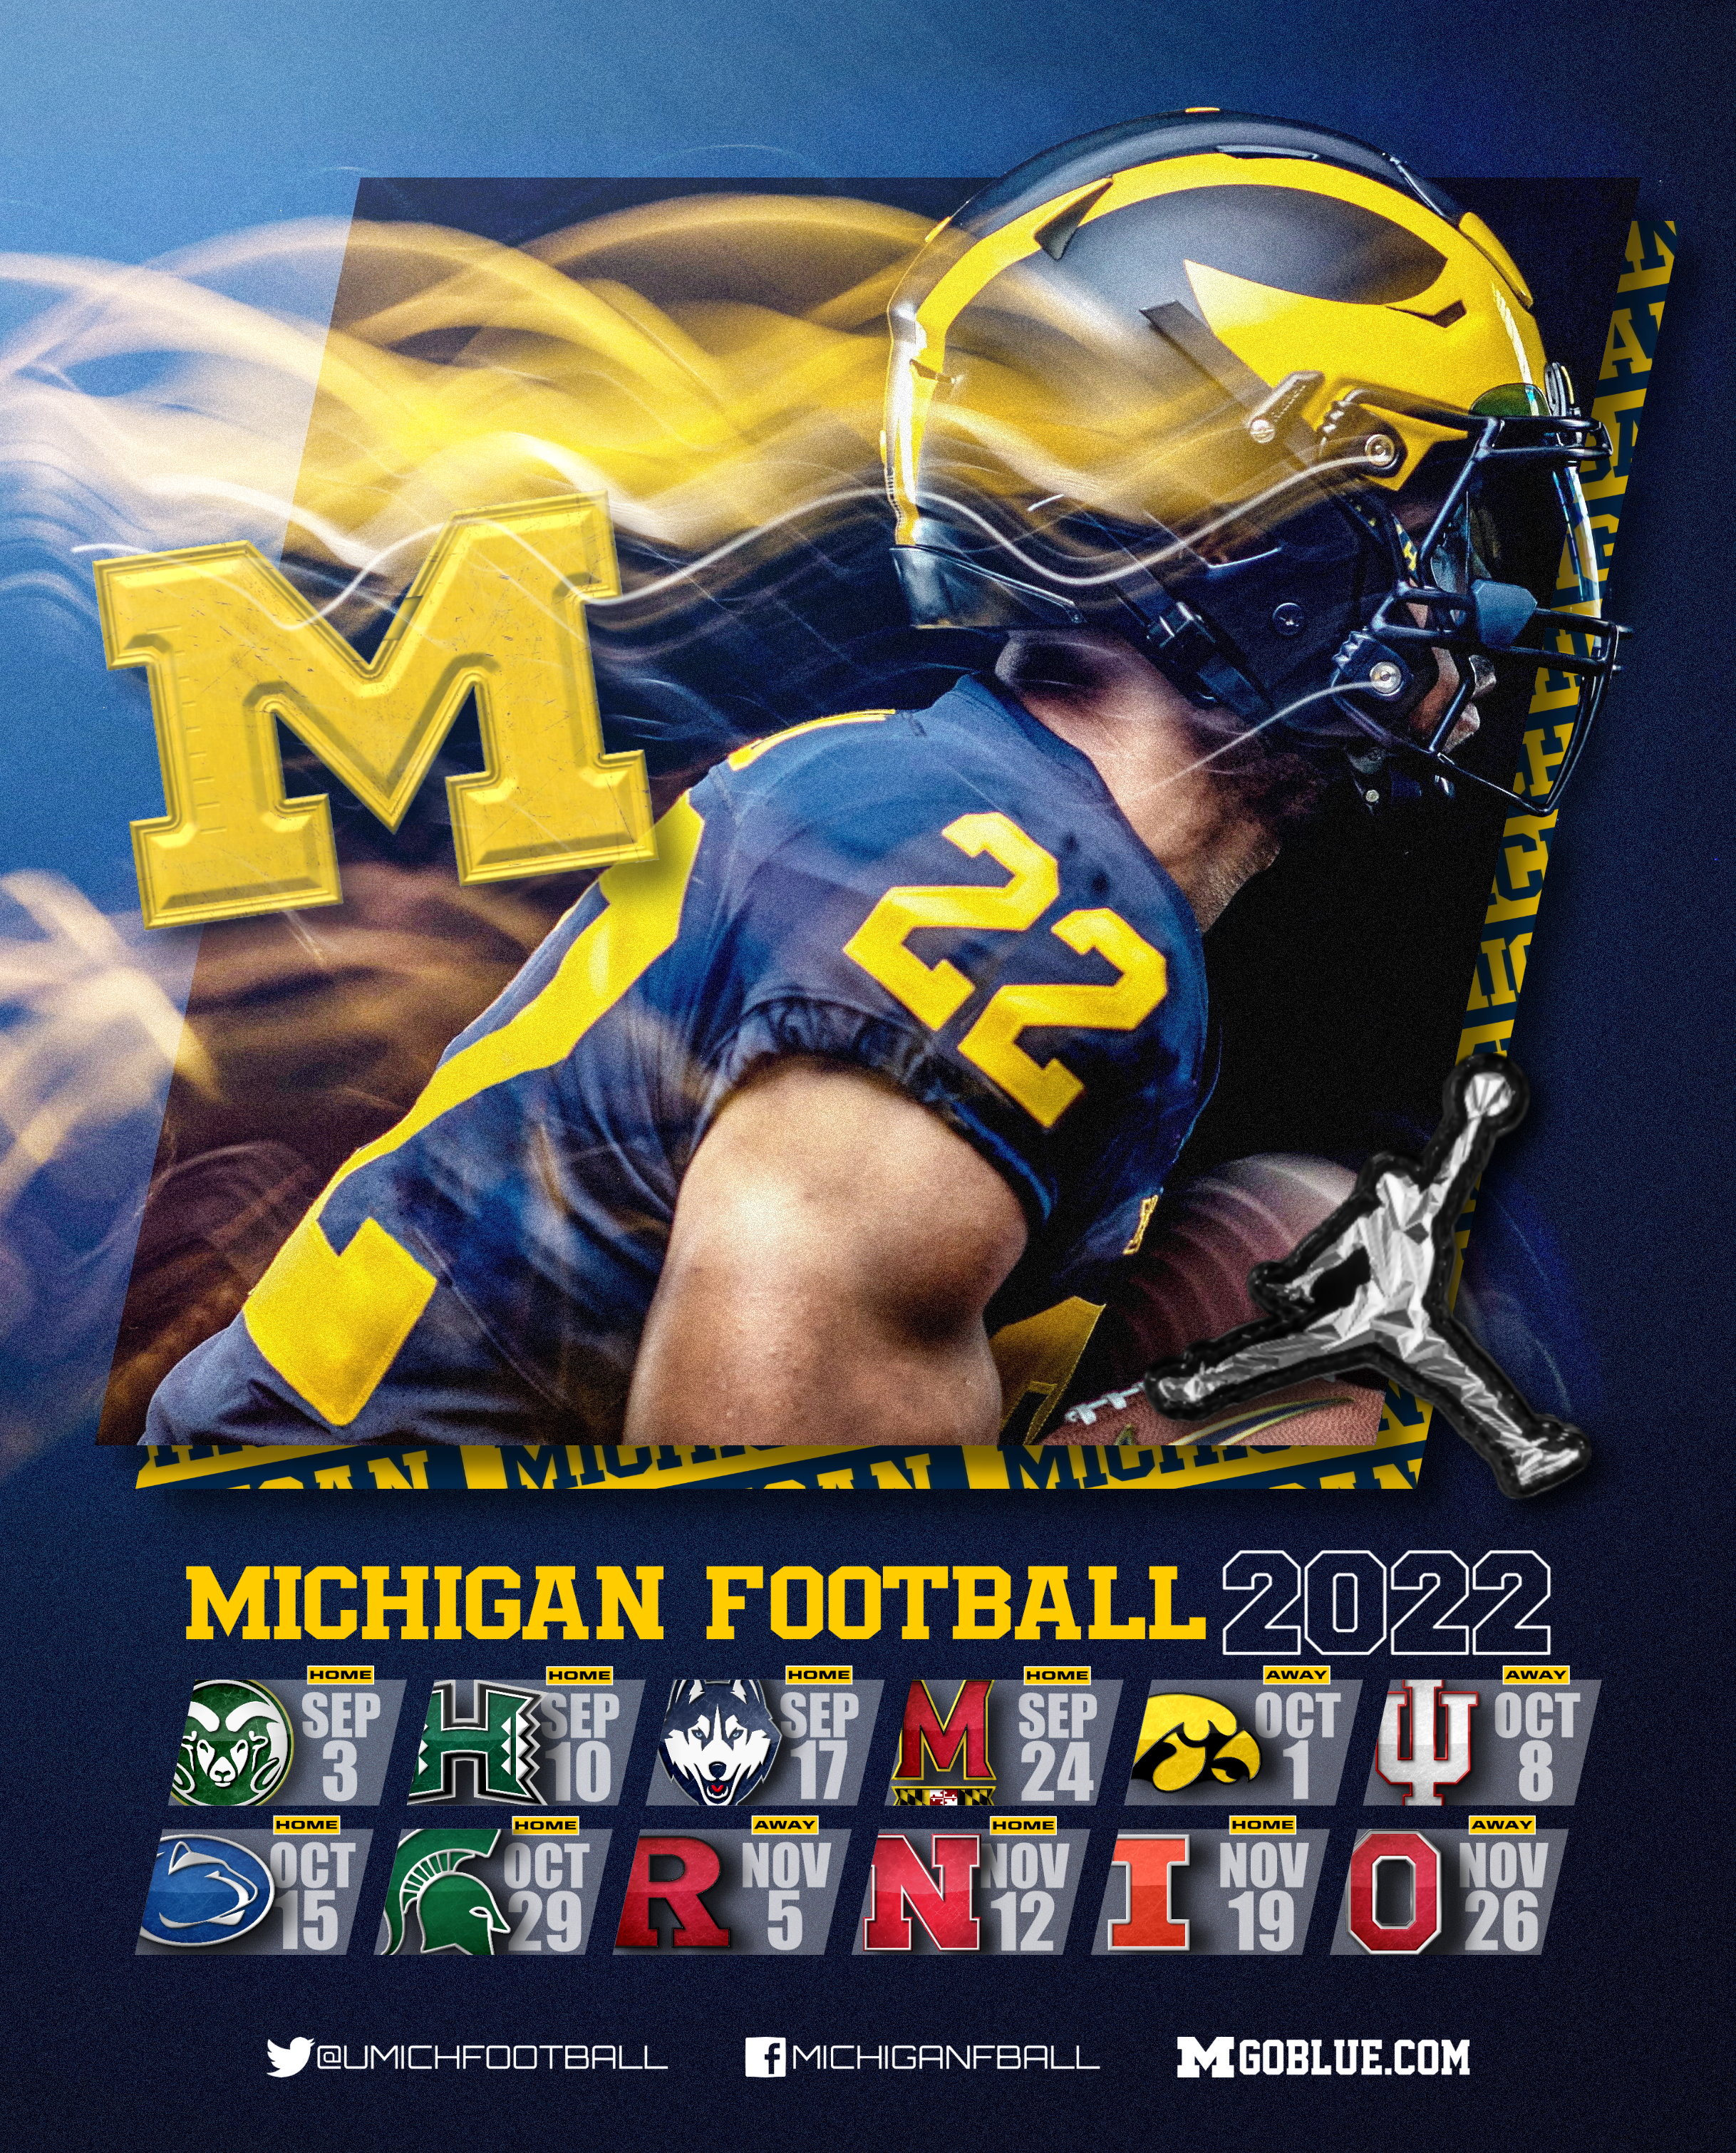 Michigan Football Schedule 2022 Michigan Football On Twitter: "𝐓𝐡𝐞 𝐌𝐢𝐜𝐡𝐢𝐠𝐚𝐧 𝐅𝐨𝐨𝐭𝐛𝐚𝐥𝐥  𝟐𝟎𝟐𝟐 𝐒𝐜𝐡𝐞𝐝𝐮𝐥𝐞! 🗞 Https://T.co/M6Z57Mi9Qh 🎟  Https://T.co/Zp7N31Szdy #Goblue Https://T.co/Bab5Dwgoqv" / Twitter